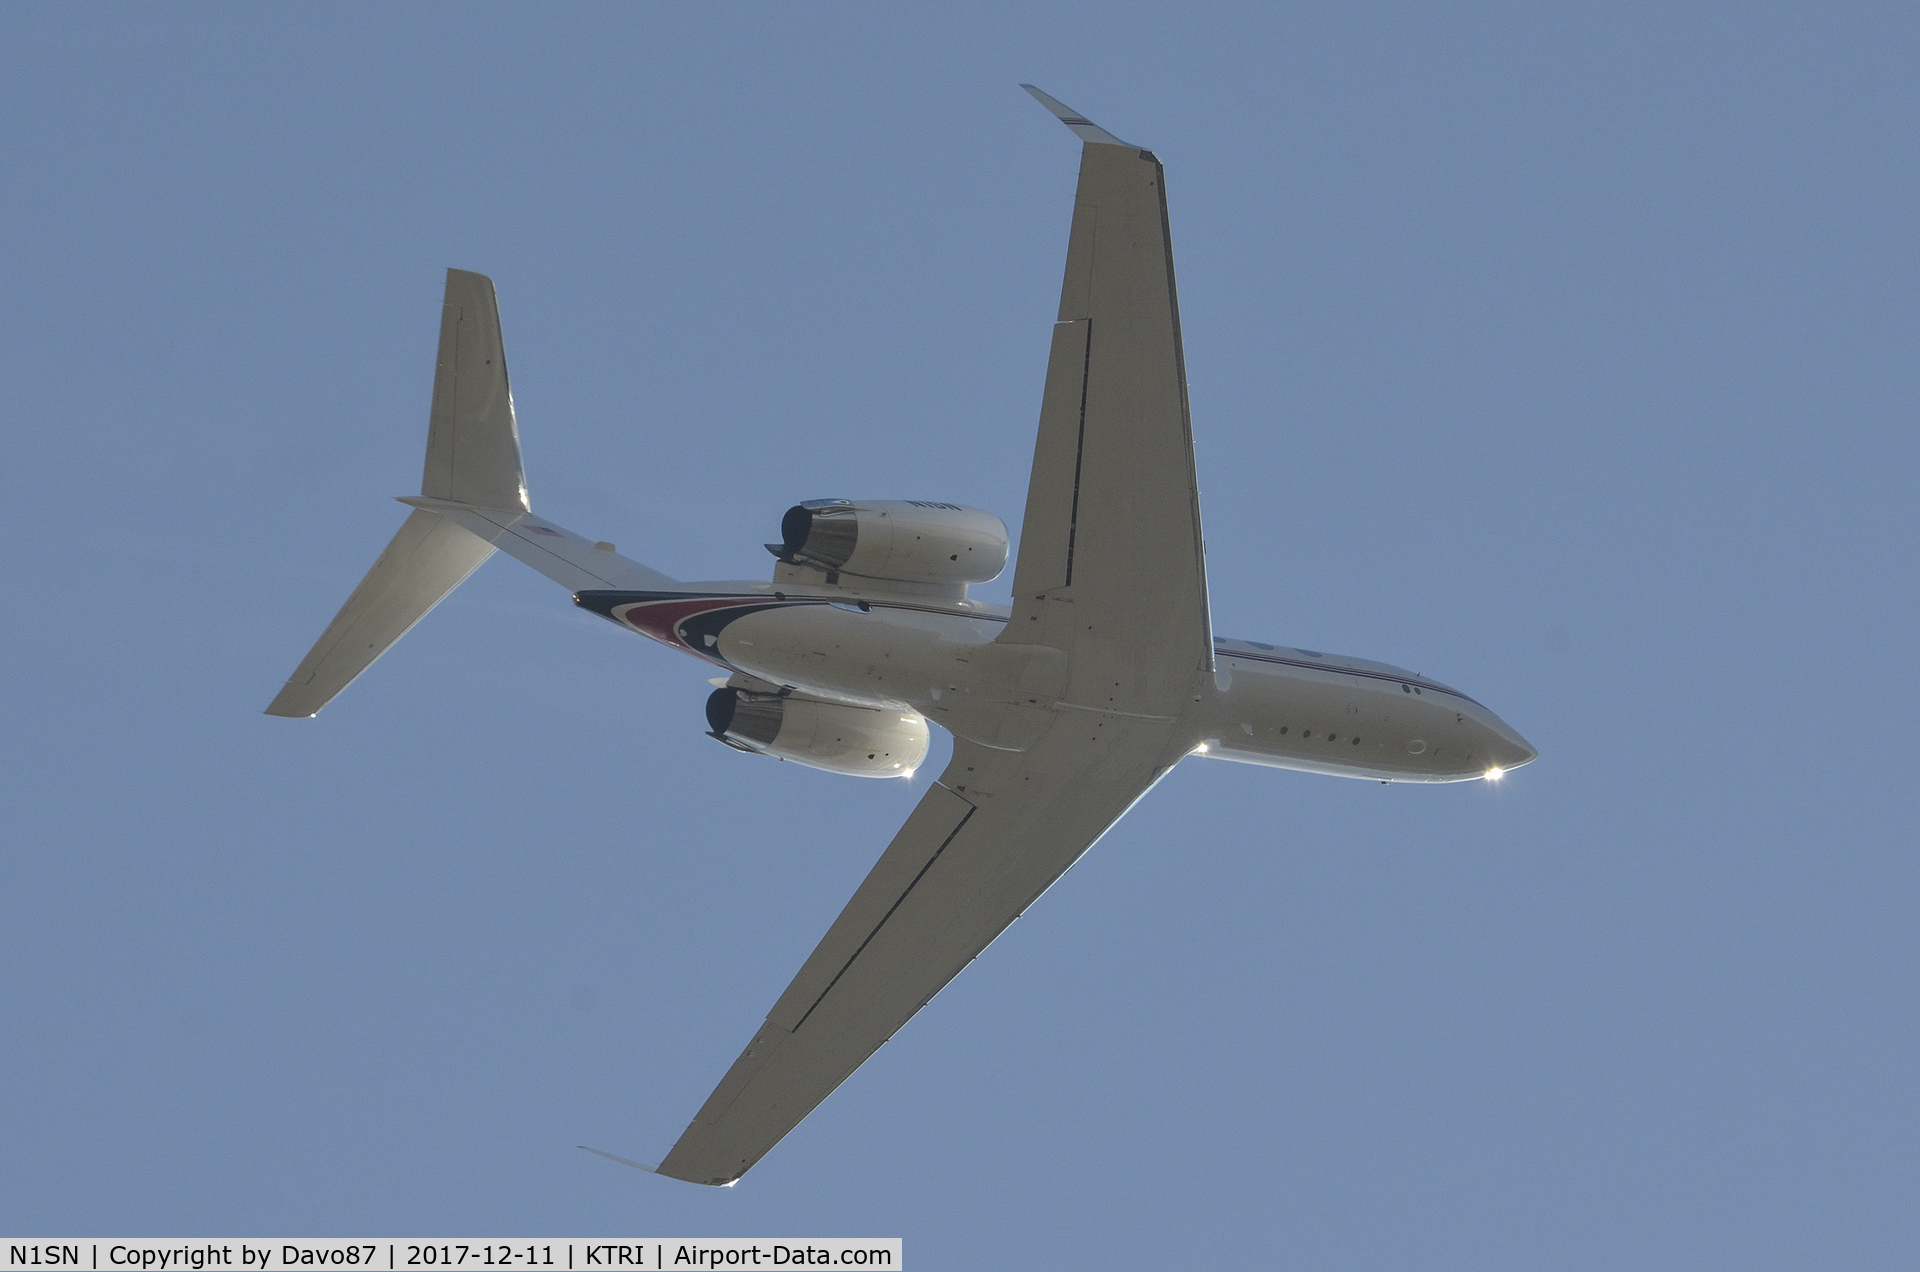 N1SN, 2000 Gulfstream Aerospace G-IV C/N 1433, Taking off from Tri-Cities Airport (KTRI) in Blountville, TN.